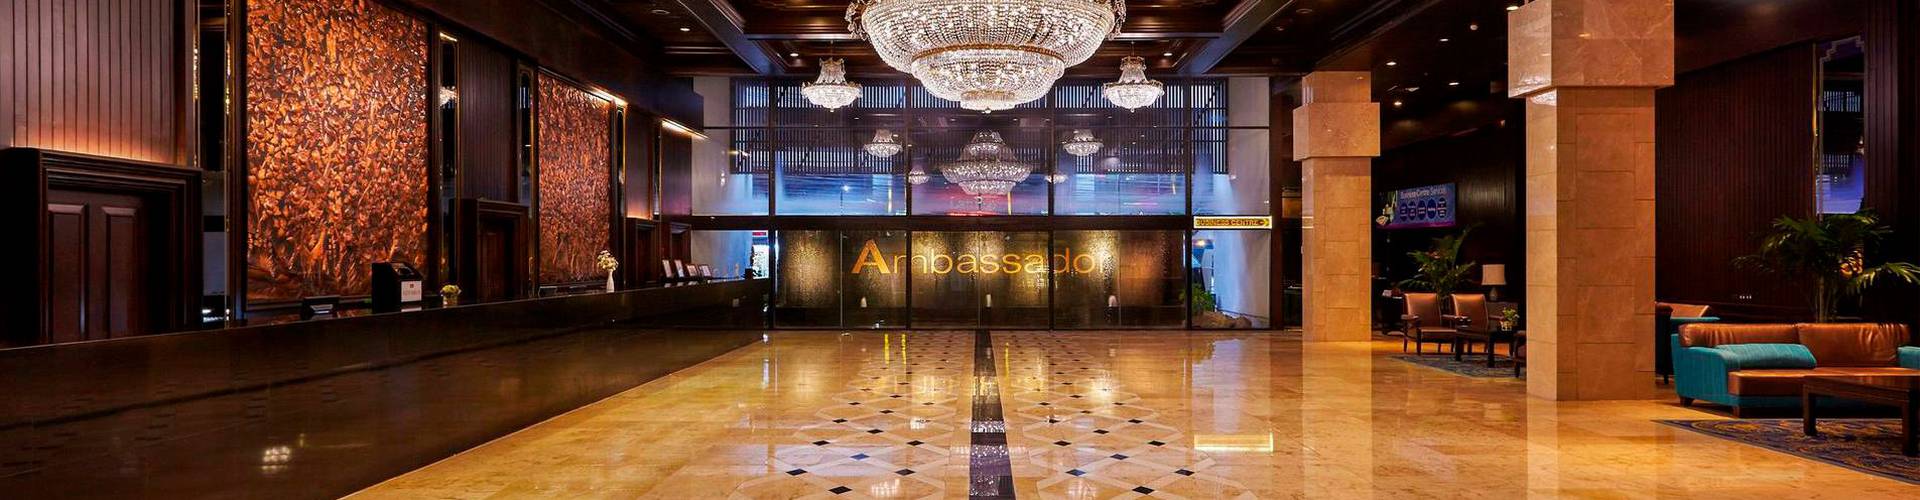 Ambassador Hotel Bangkok - กรุงเทพมหานคร - 